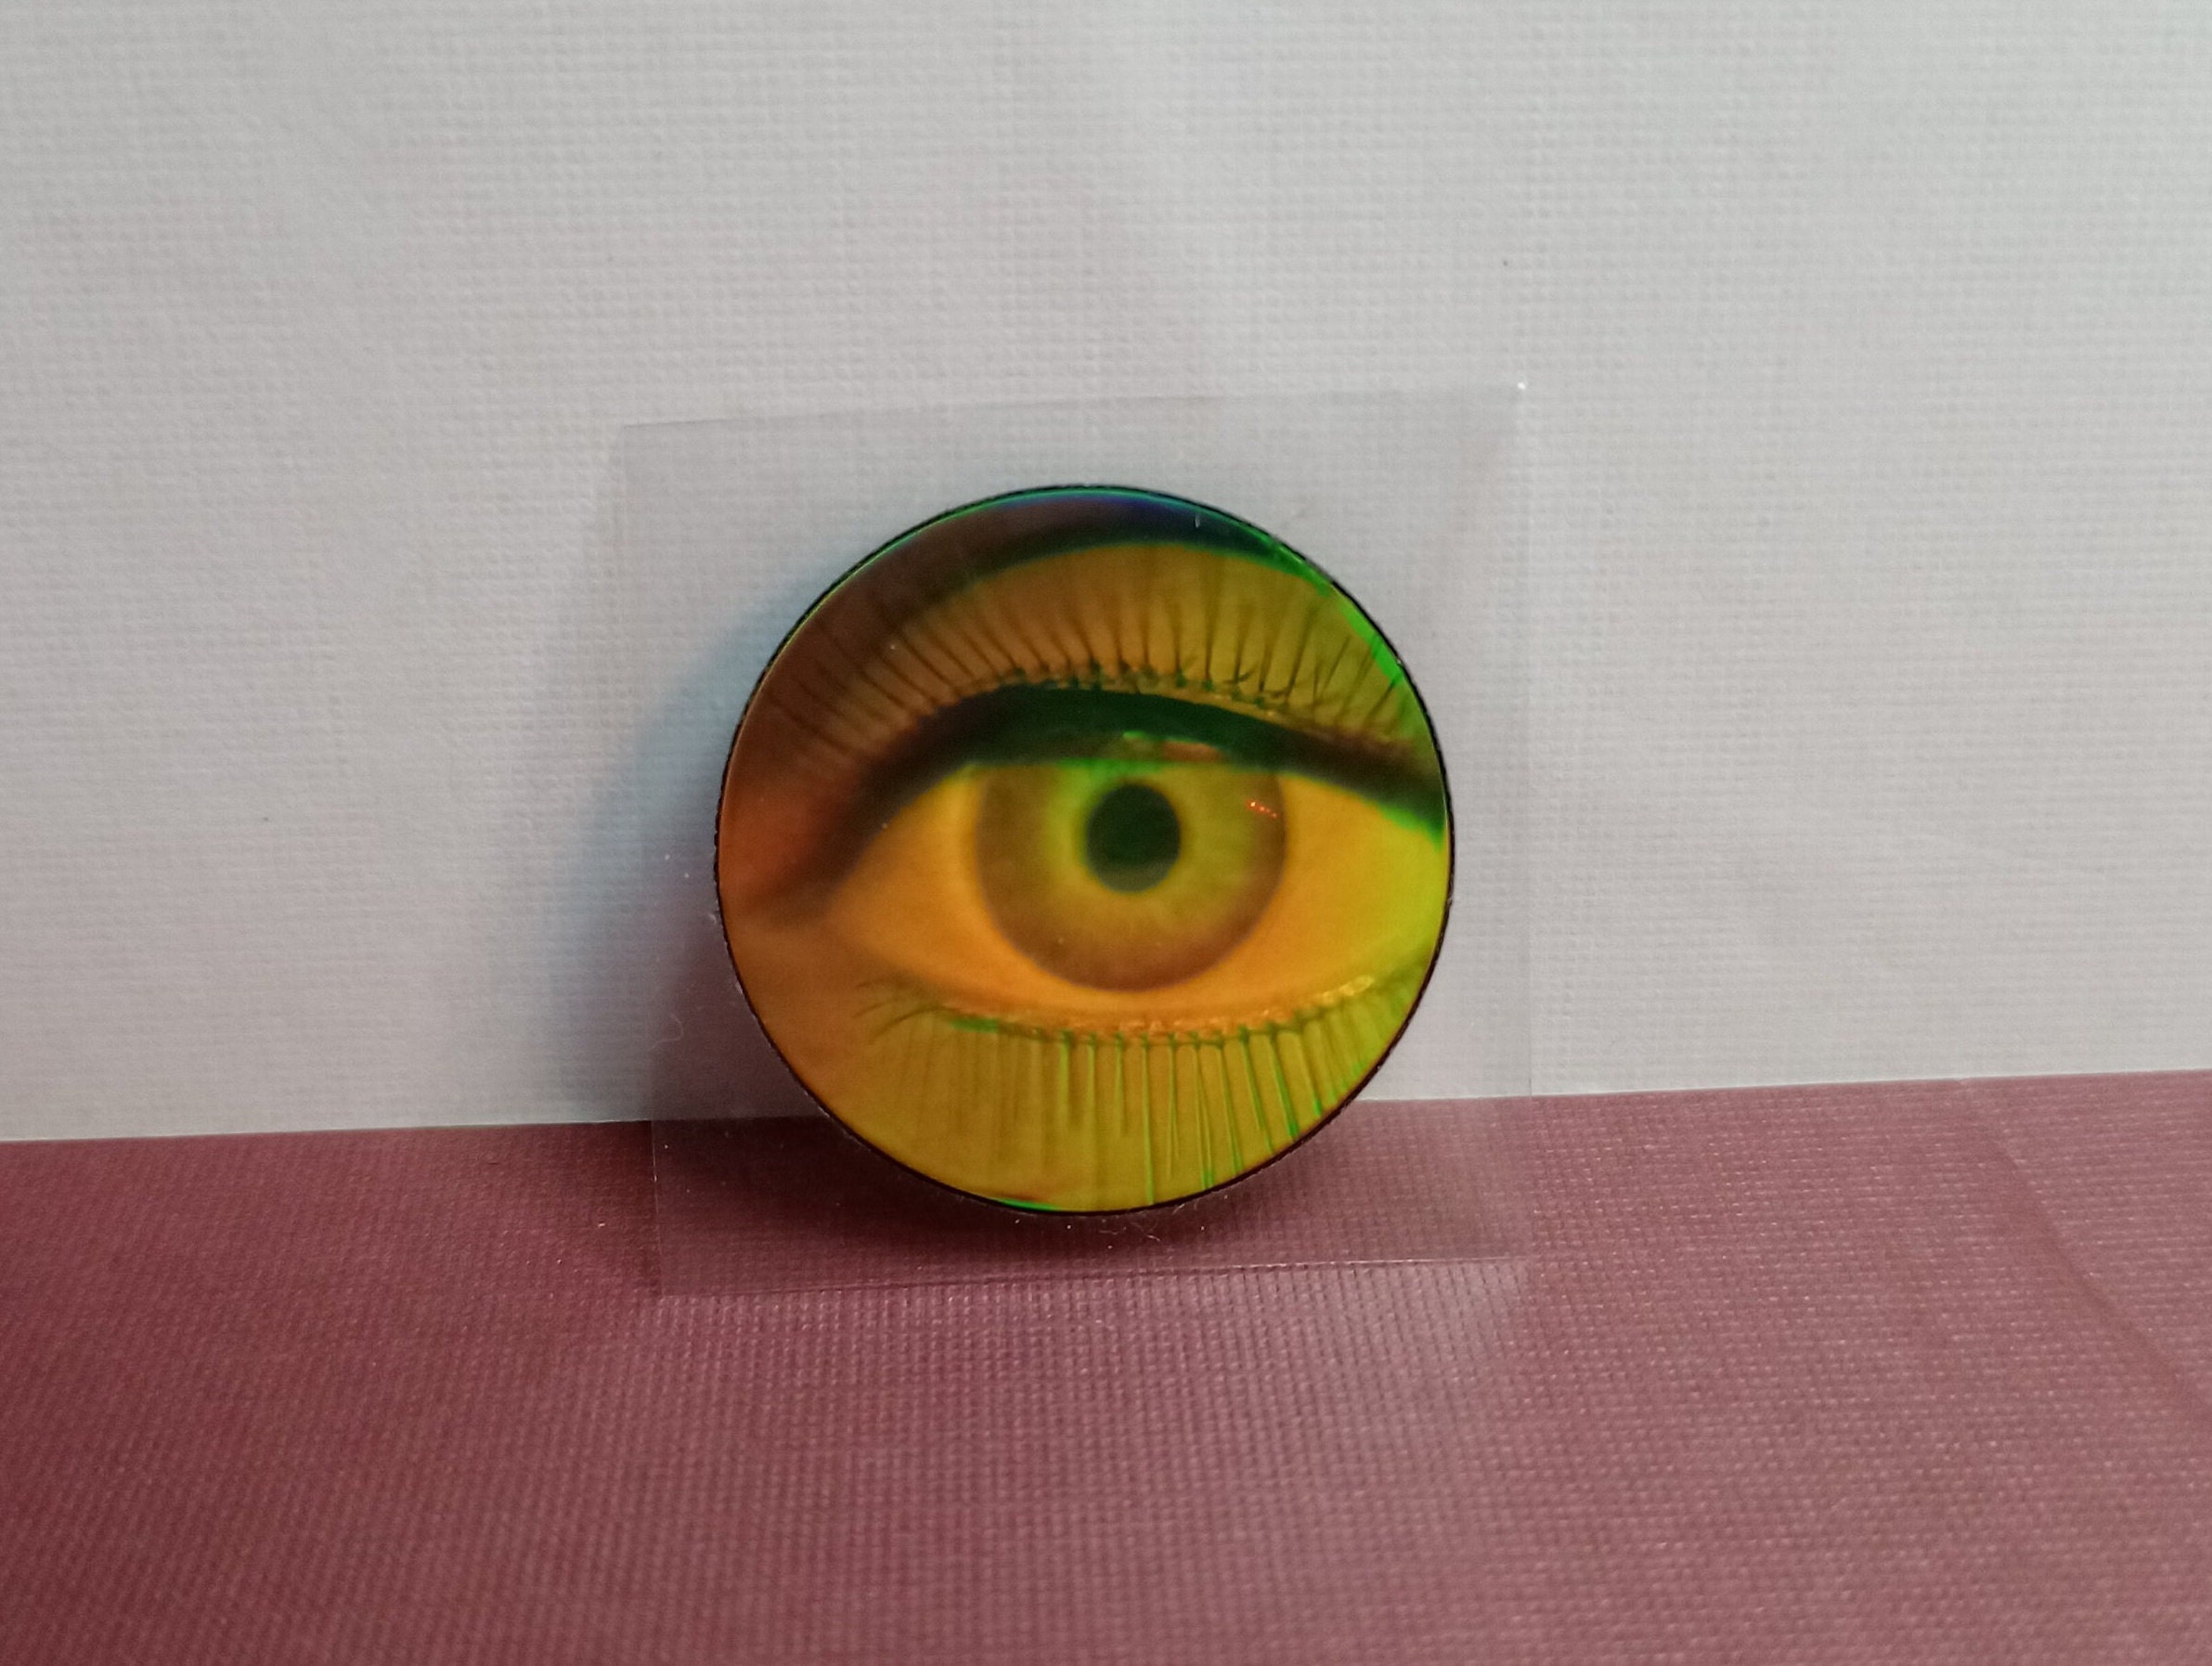 Eyeball Sticker – I Heart Guts – Museum Store – International